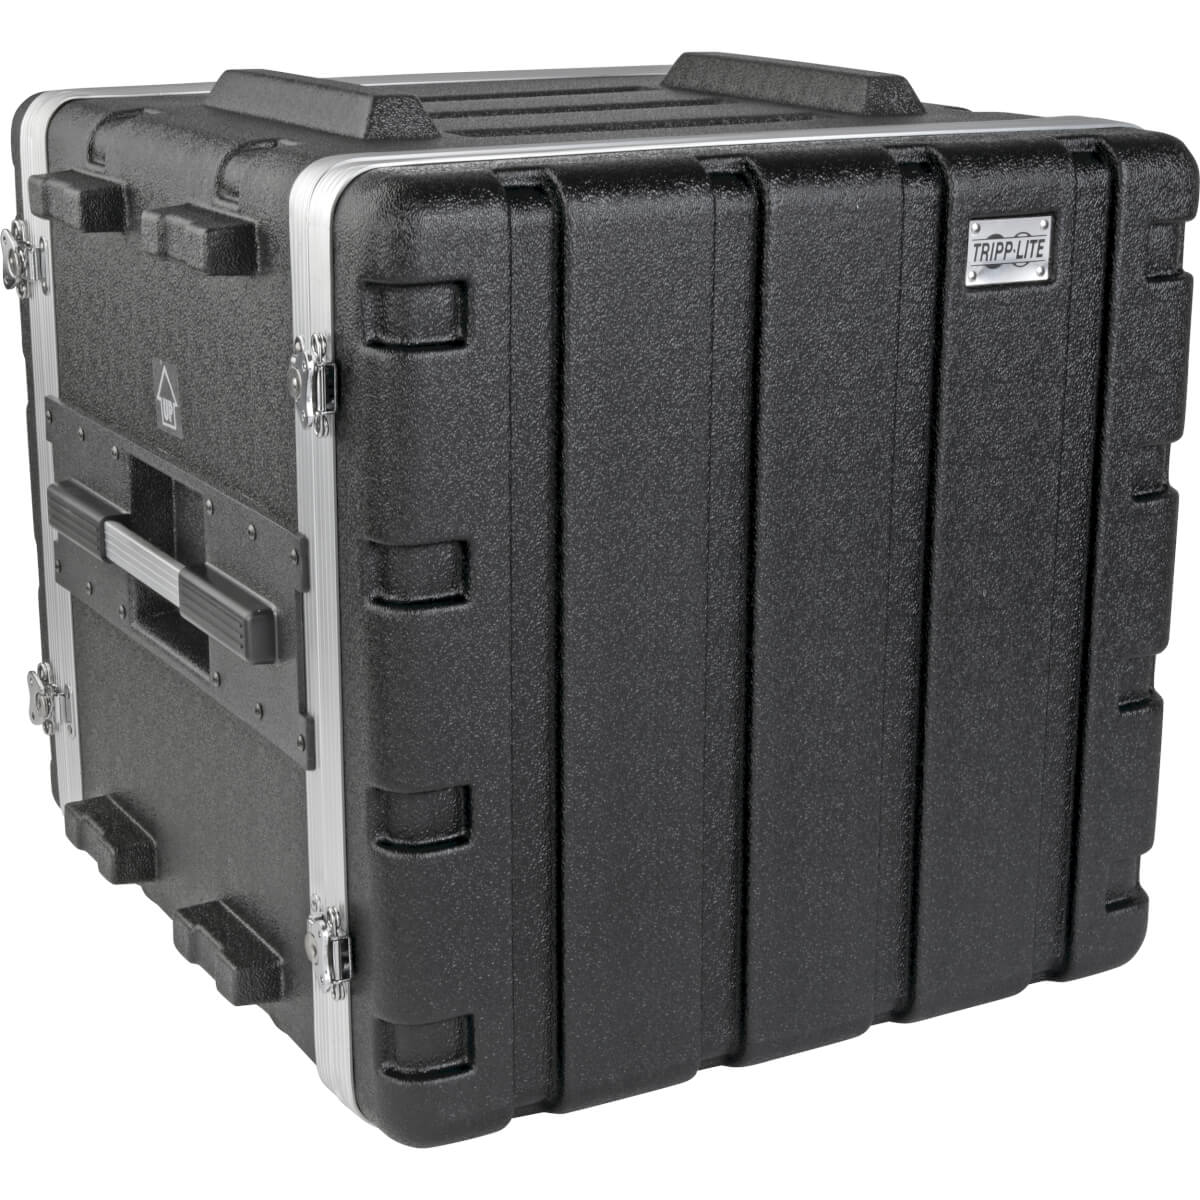 EATON TRIPPLITE 10U ABS Server Rack Equipment Shipping Case